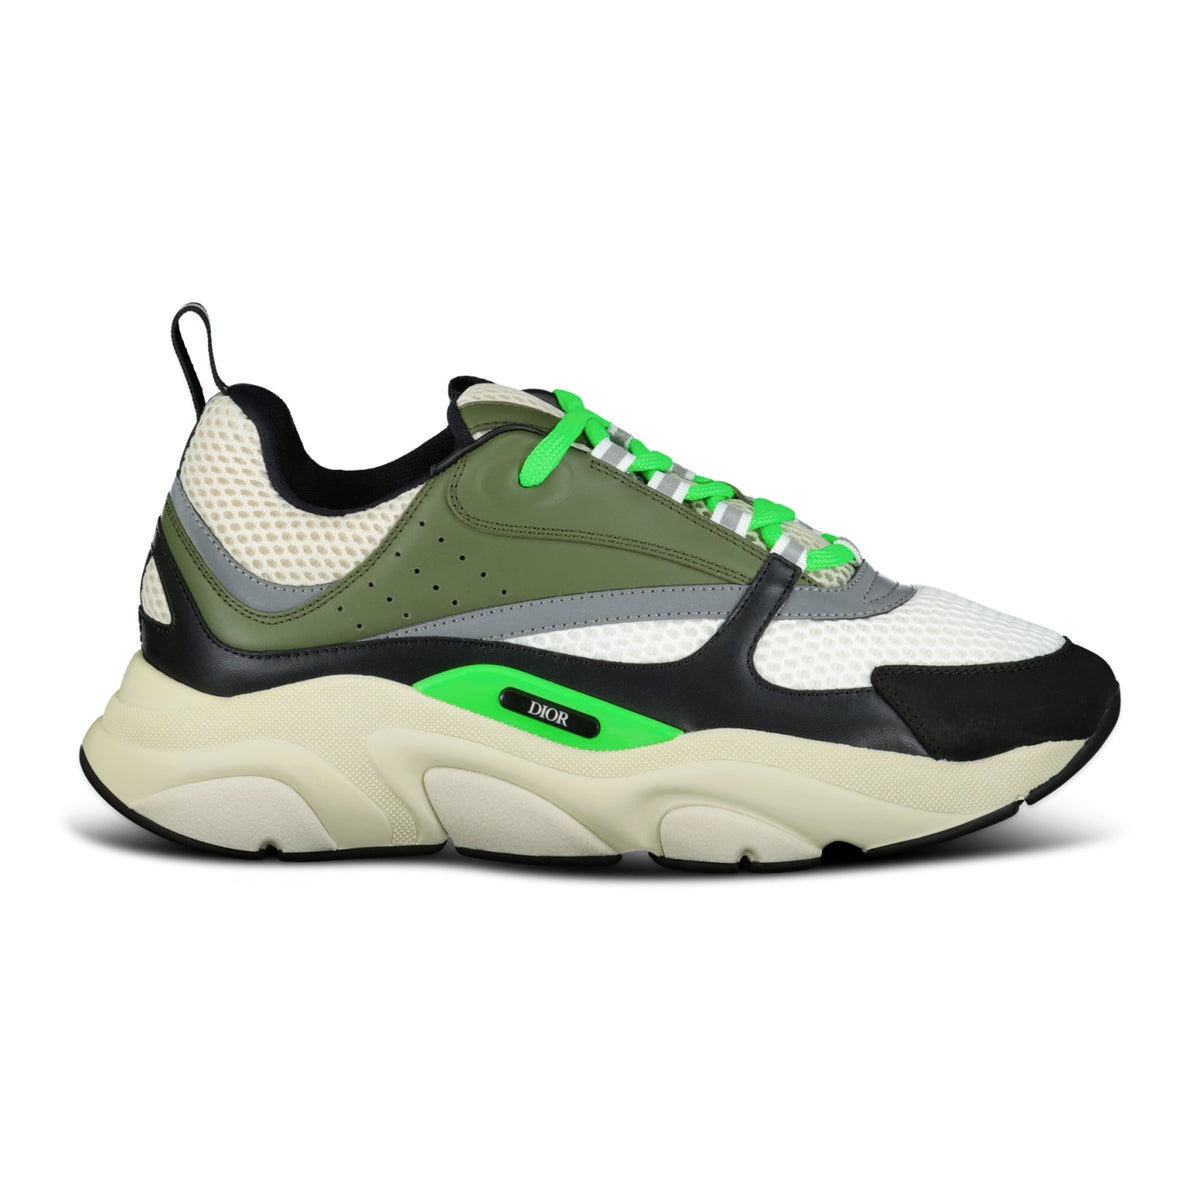 Christian Dior B22 Green/Grey Reflective Trainer Sneaker